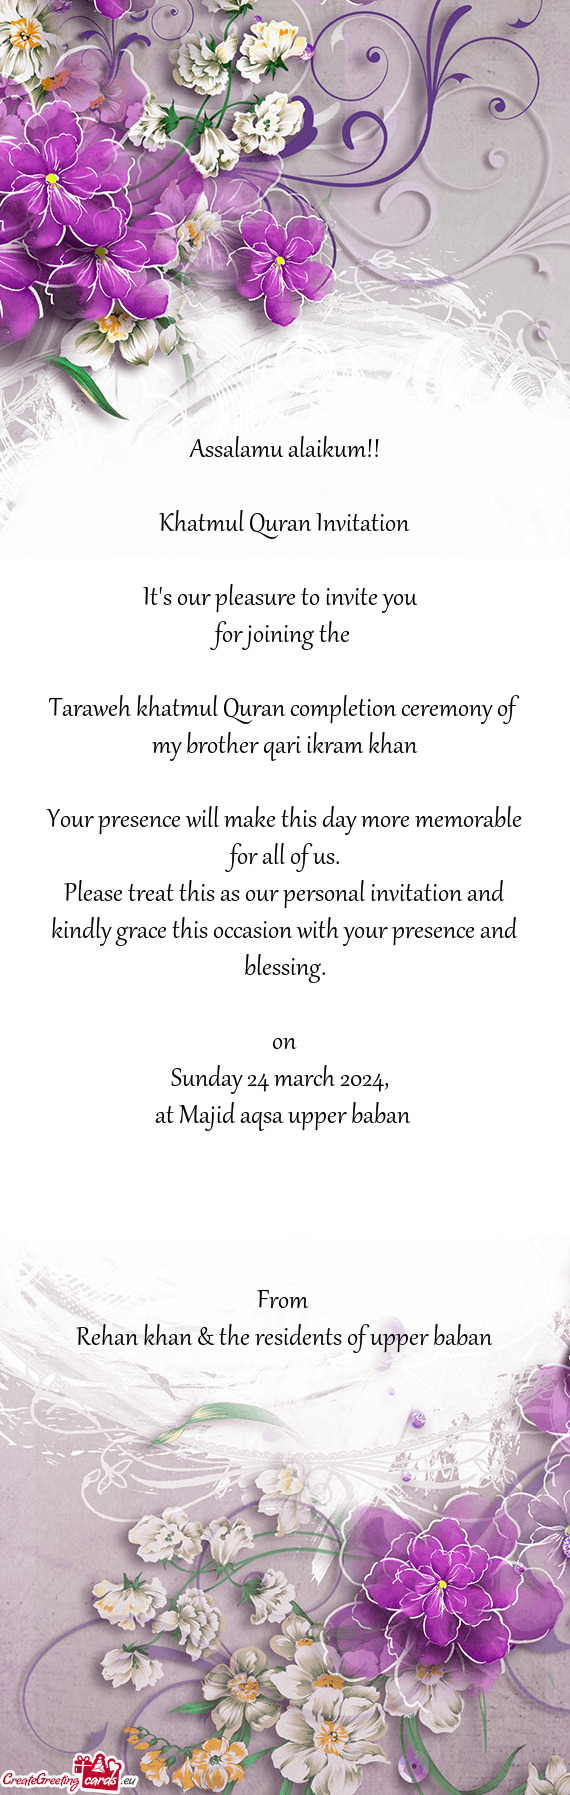 Taraweh khatmul Quran completion ceremony of my brother qari ikram khan